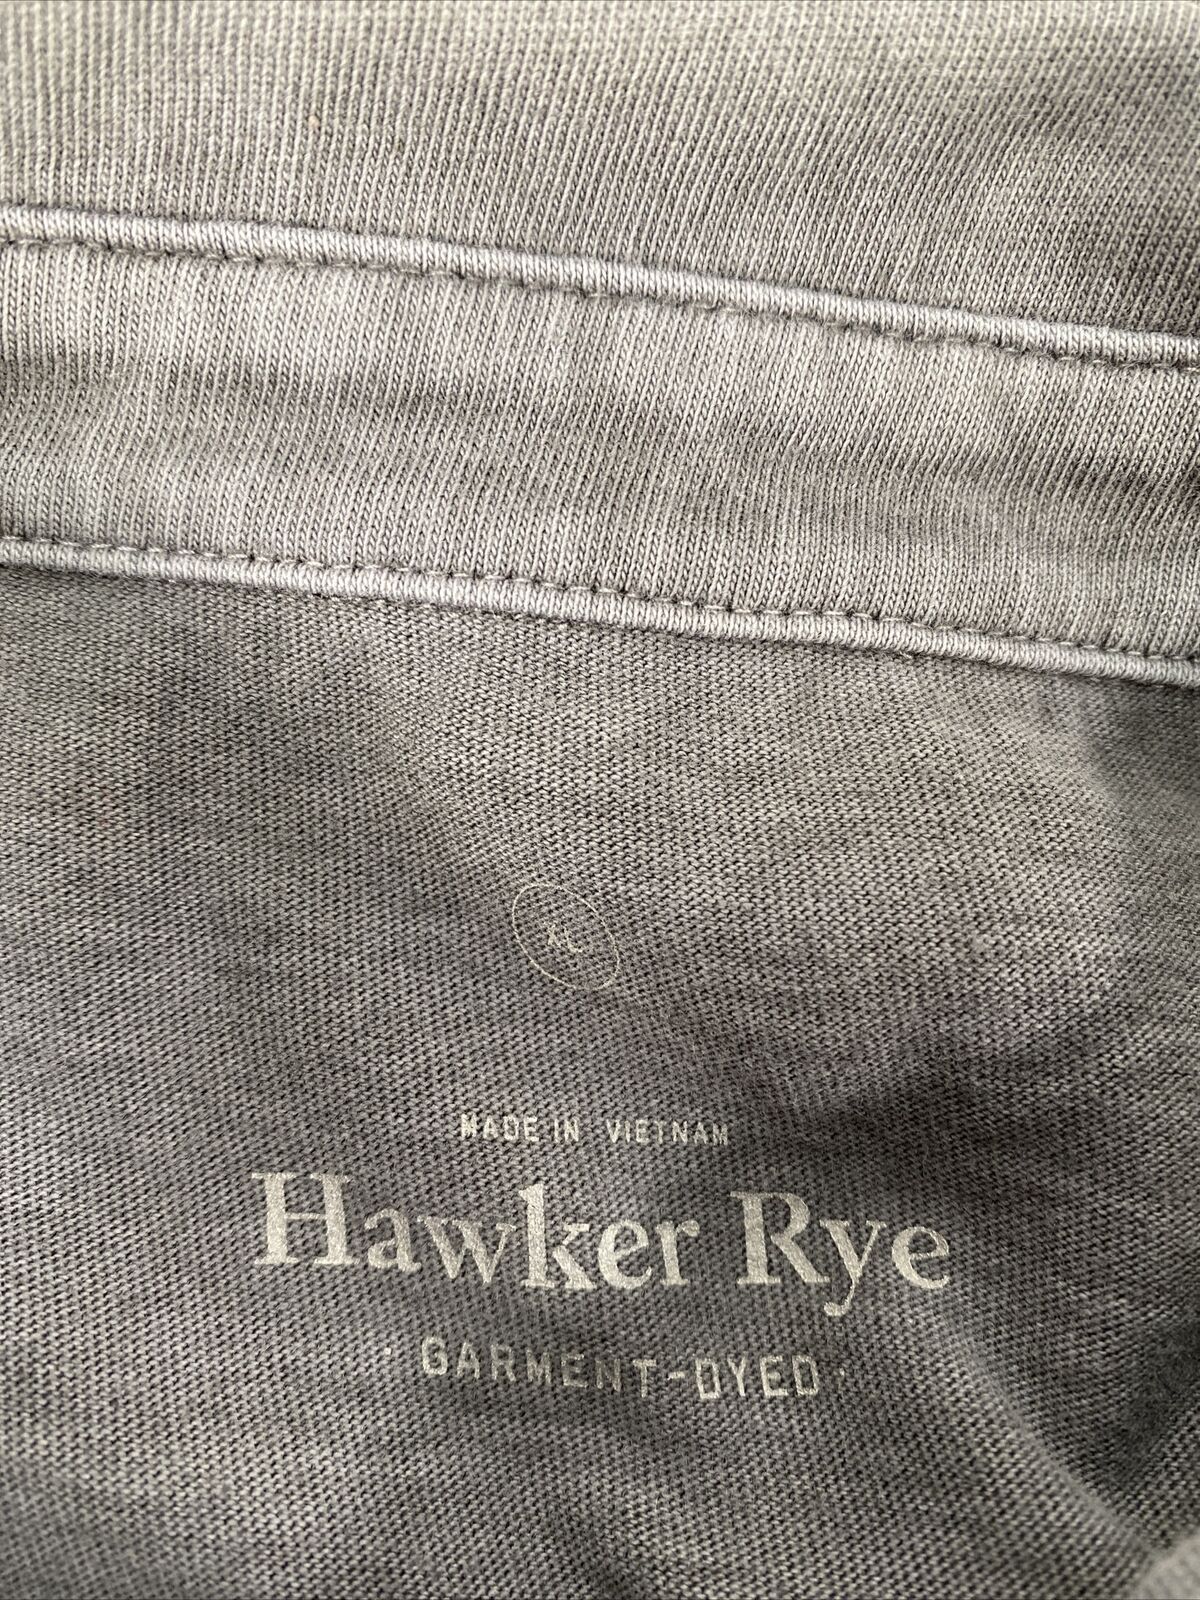 Hawker Rye Men's Gray Short Sleeve Polo Shirt - XL